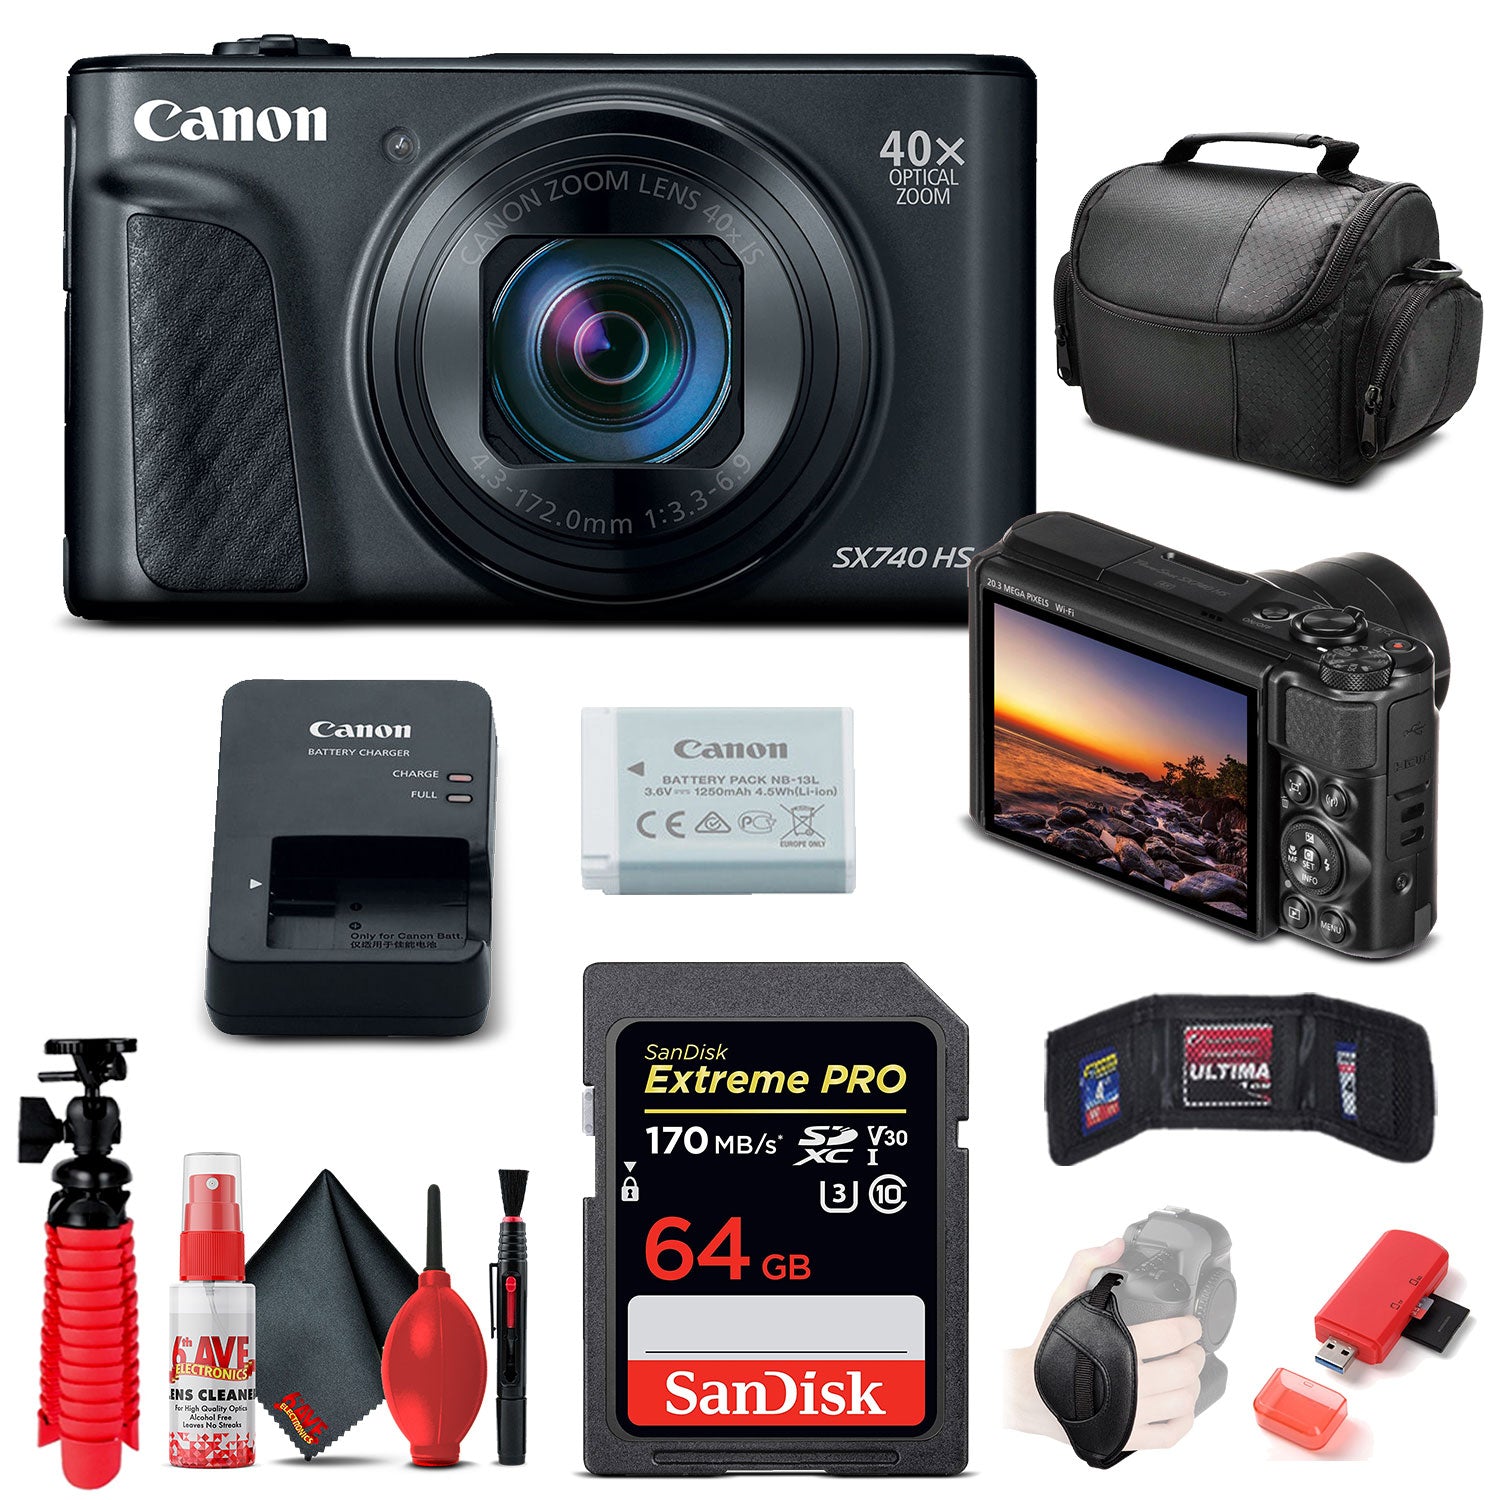 Canon PowerShot SX740 HS Digital Camera (Black) (2955C001) + 64GB Card Base Bundle